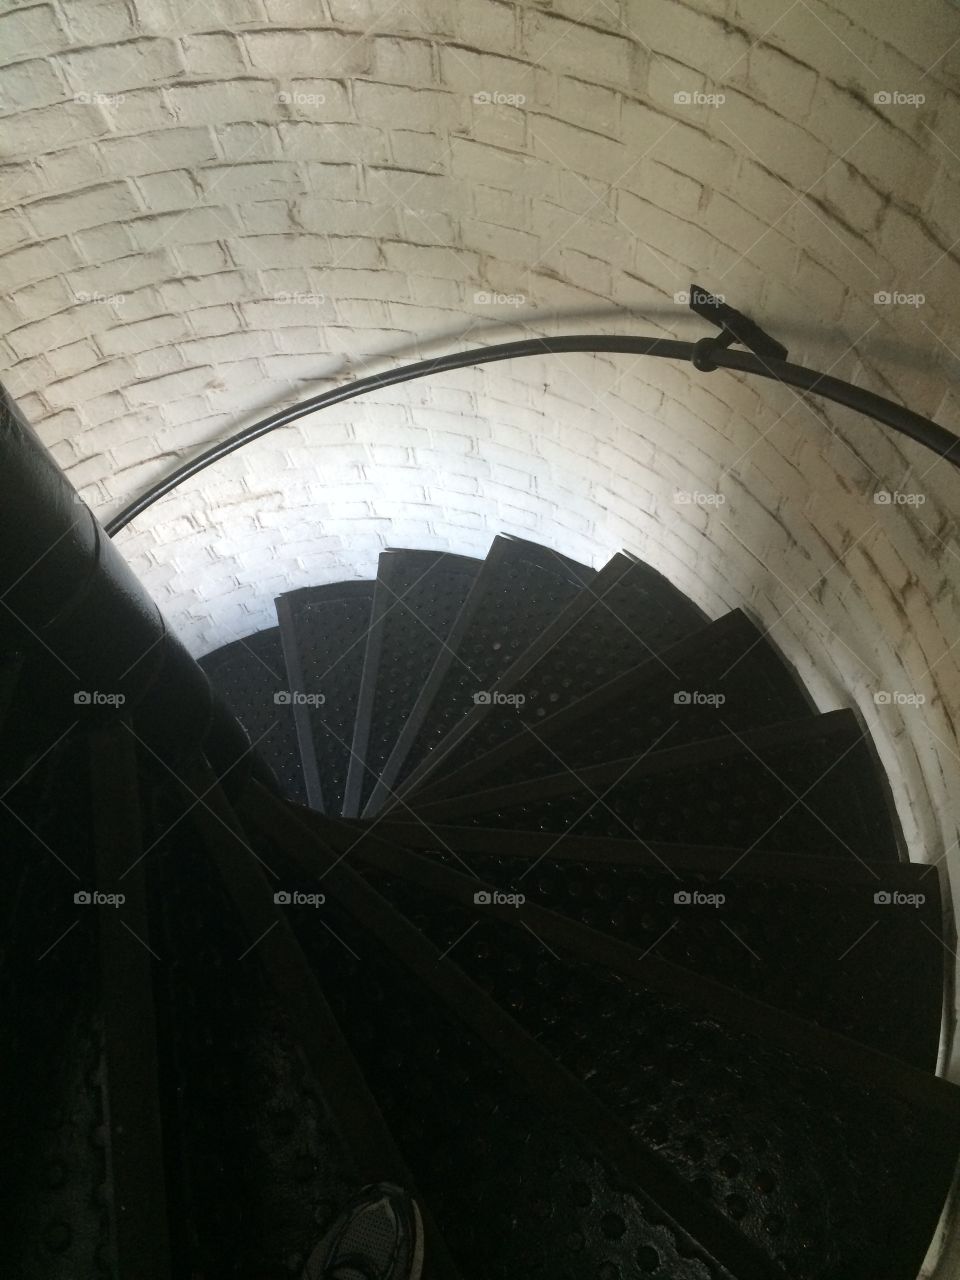 Vertigo-inducing glance down the spiral staircase inside St. Simons Lighthouse, Georgia. 